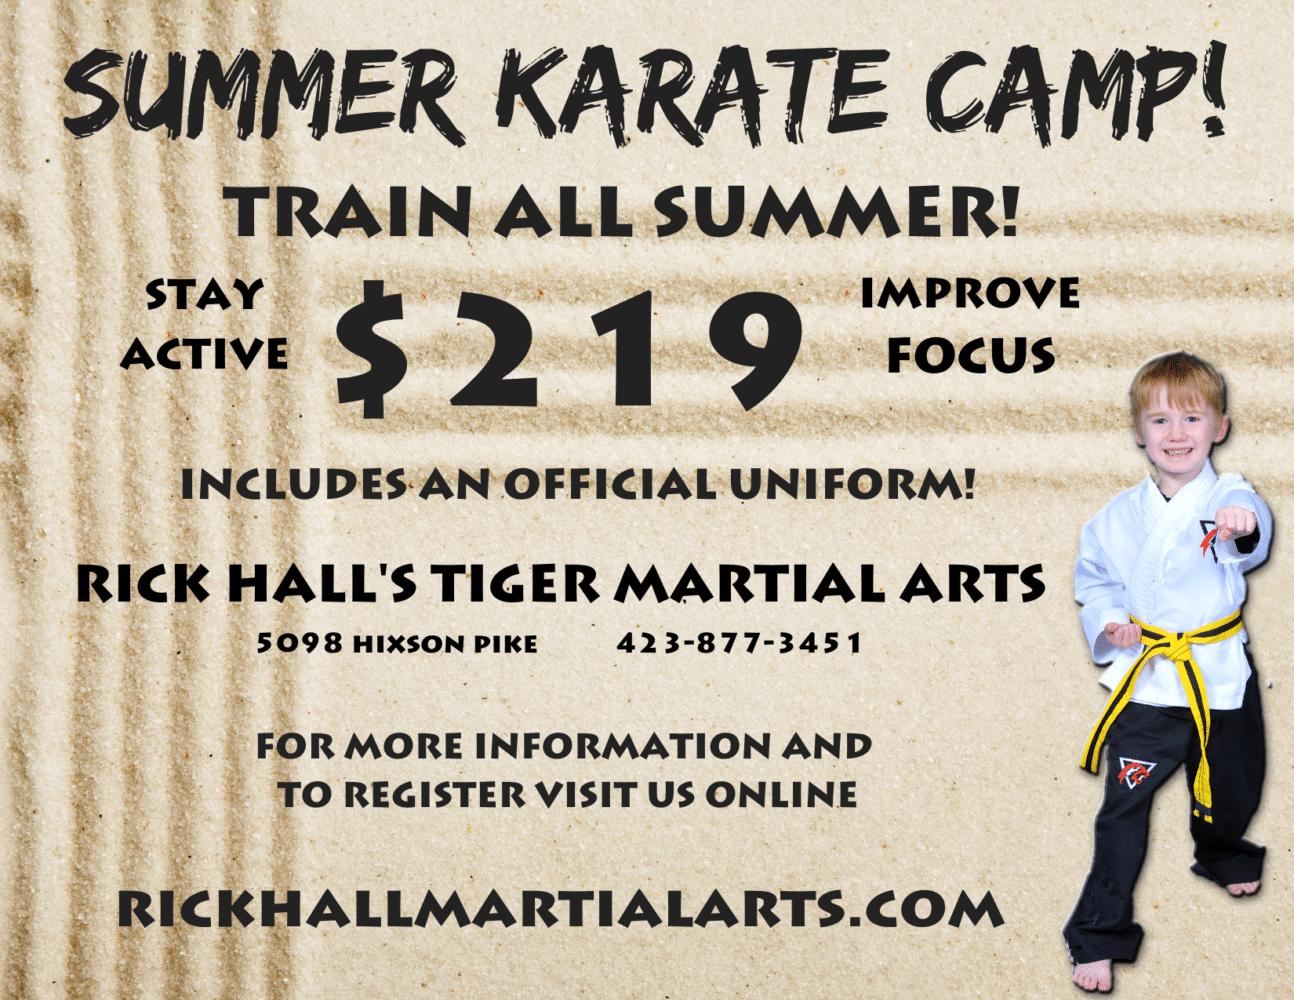 Rick Hall's Tiger Martial Arts Summer Karate Camp!